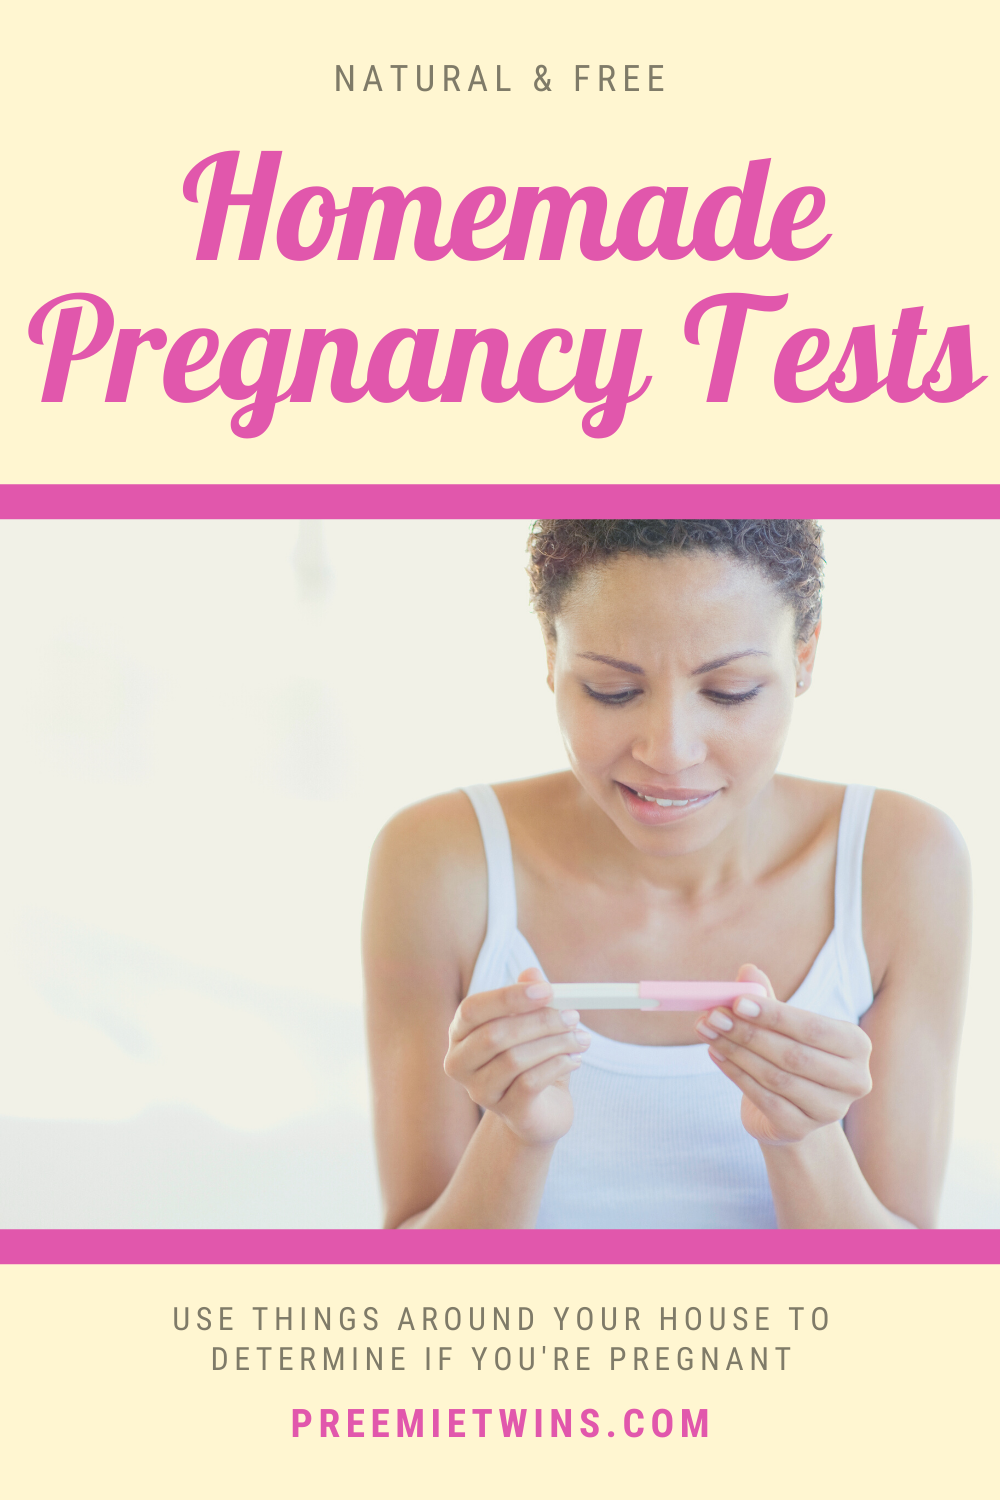 DIY Pregnancy Tests